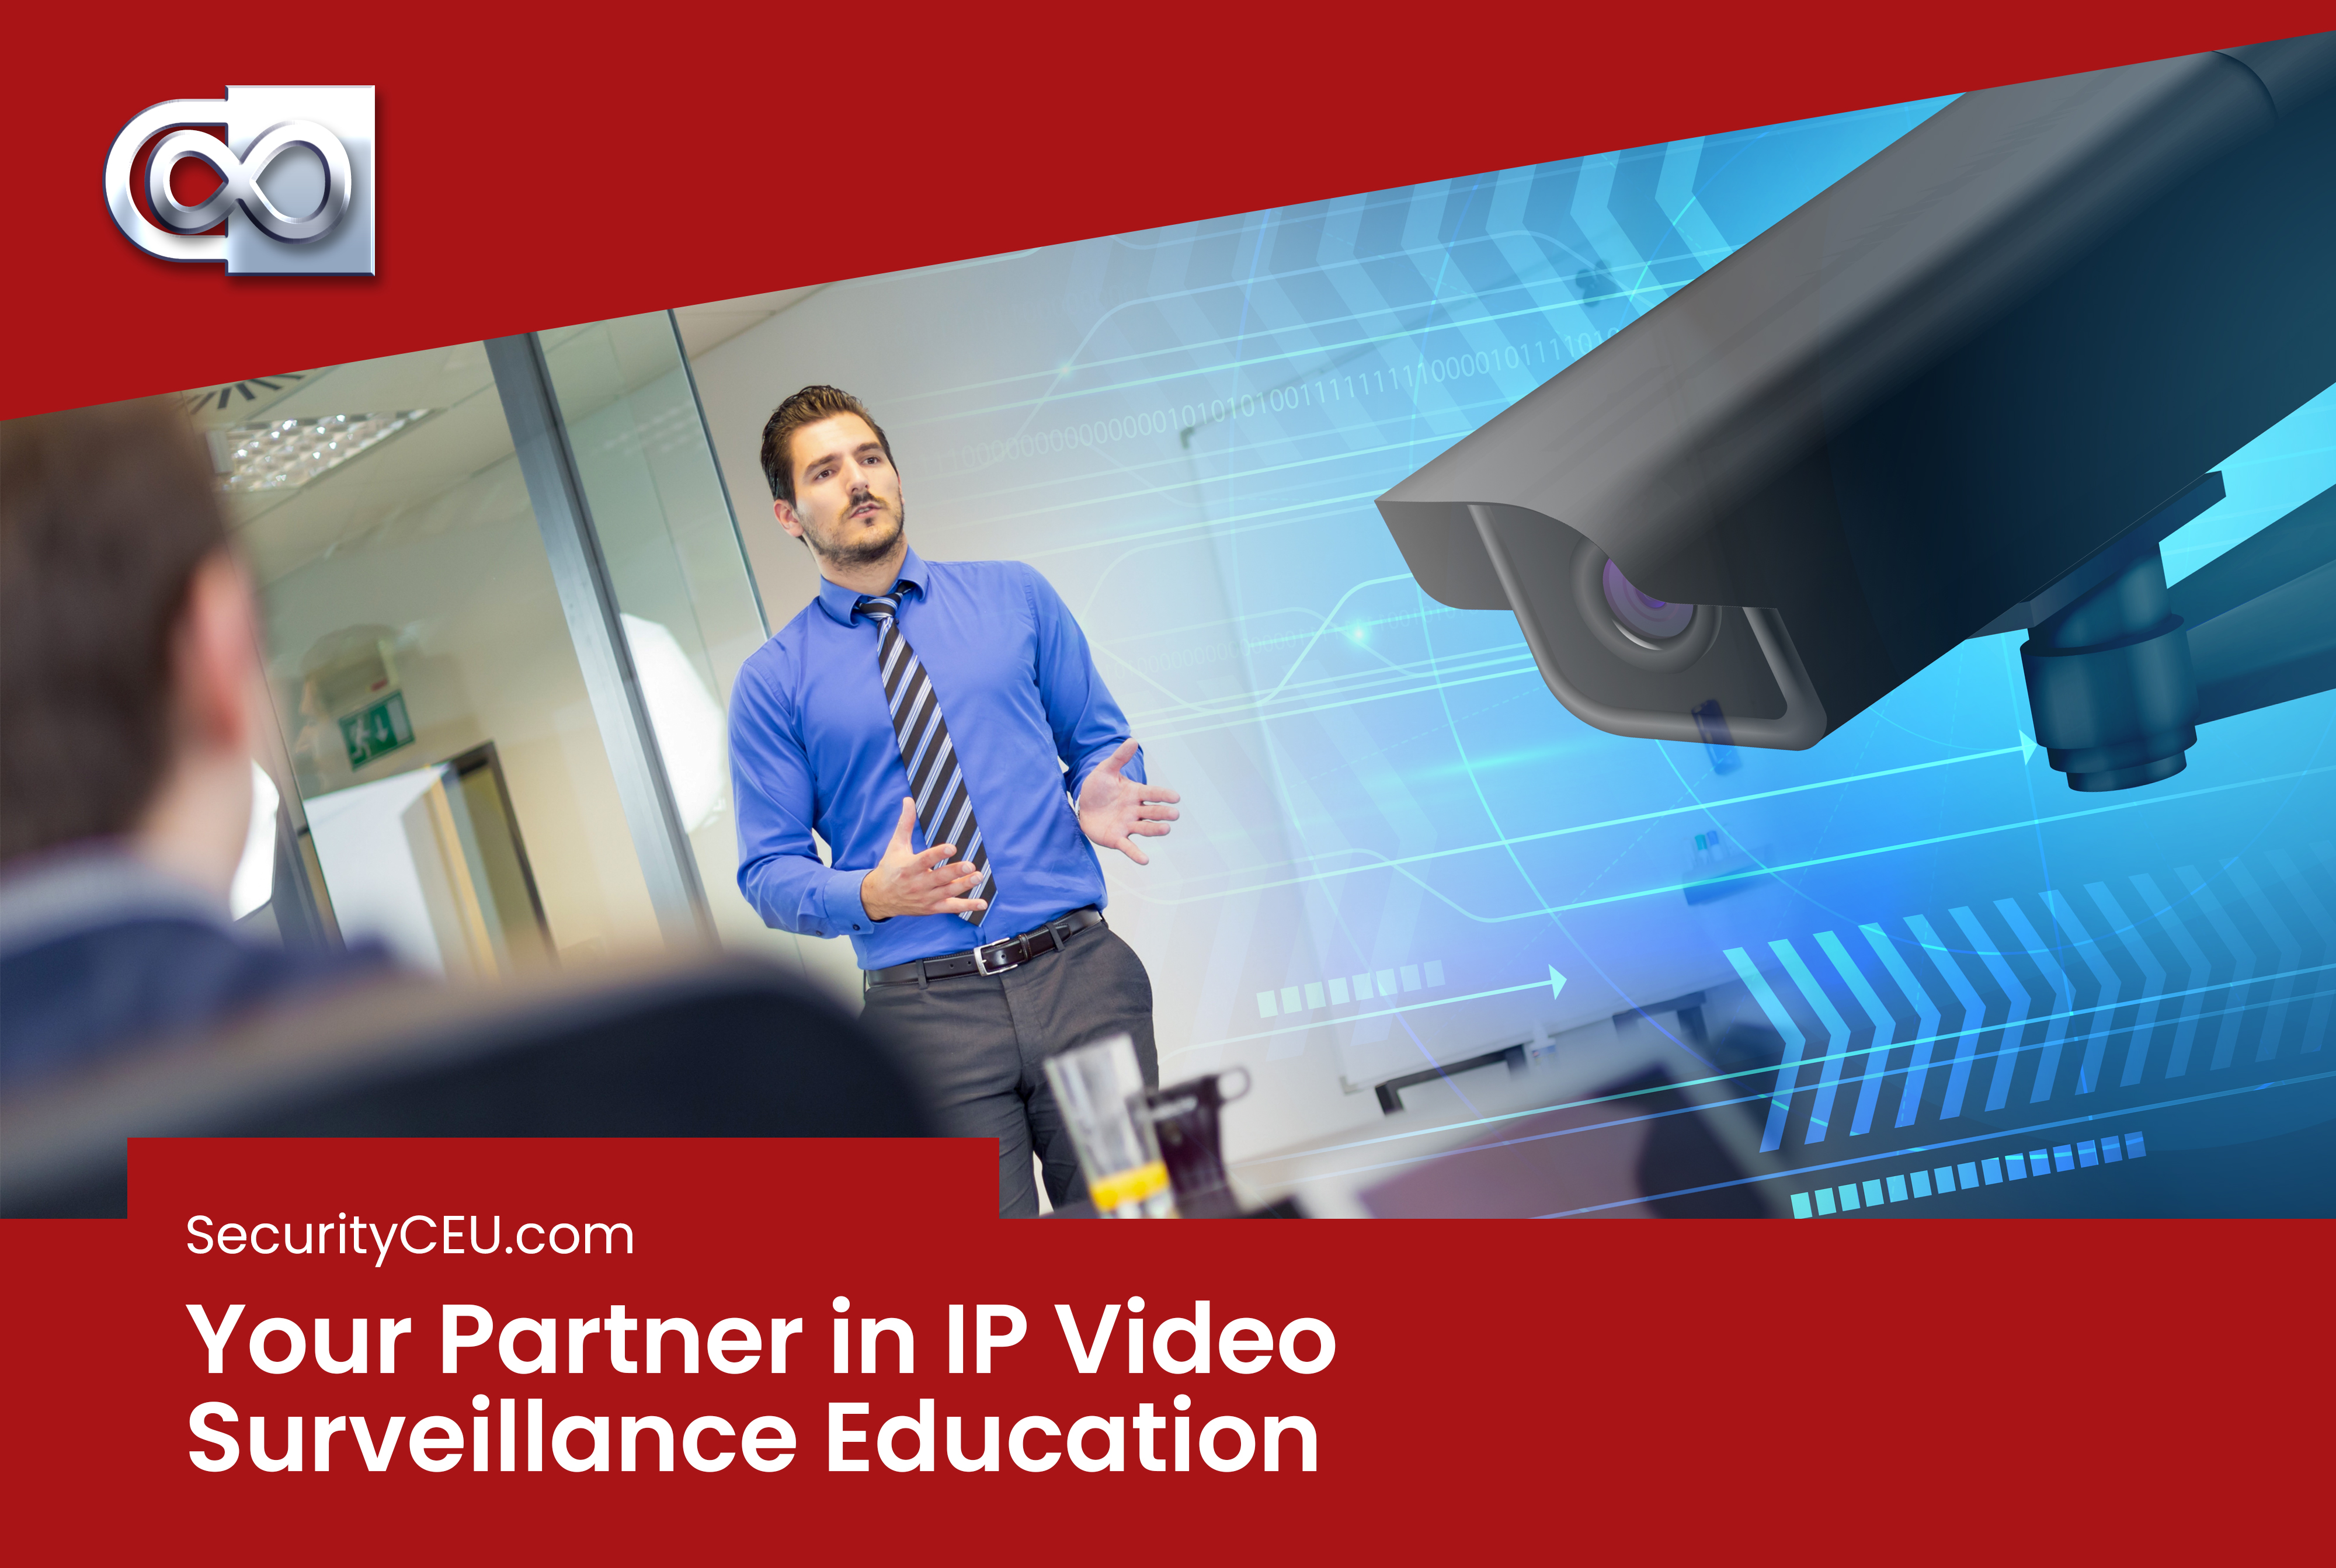 SecurityCEU.com: Your Partner in IP Video Surveillance Education